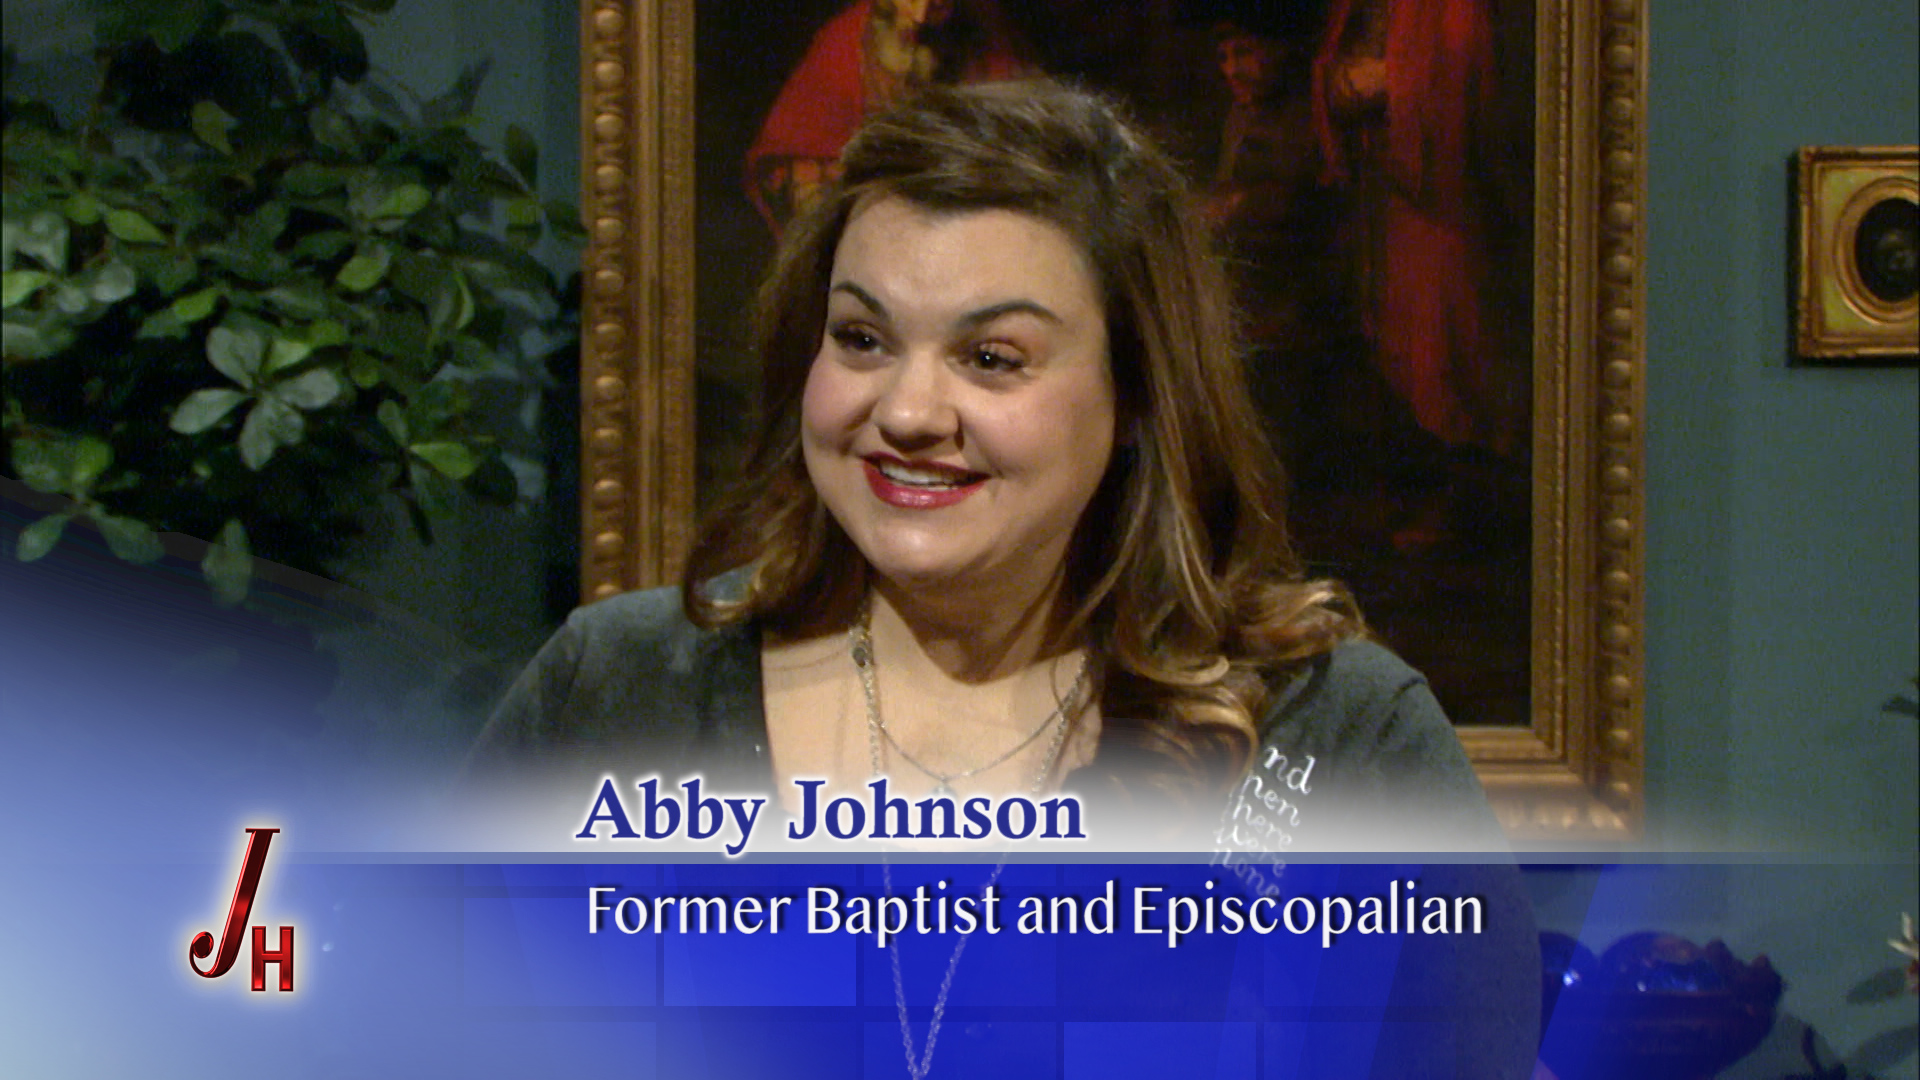 Amid controversy, Abby Johnson speaks at Catholic University of America